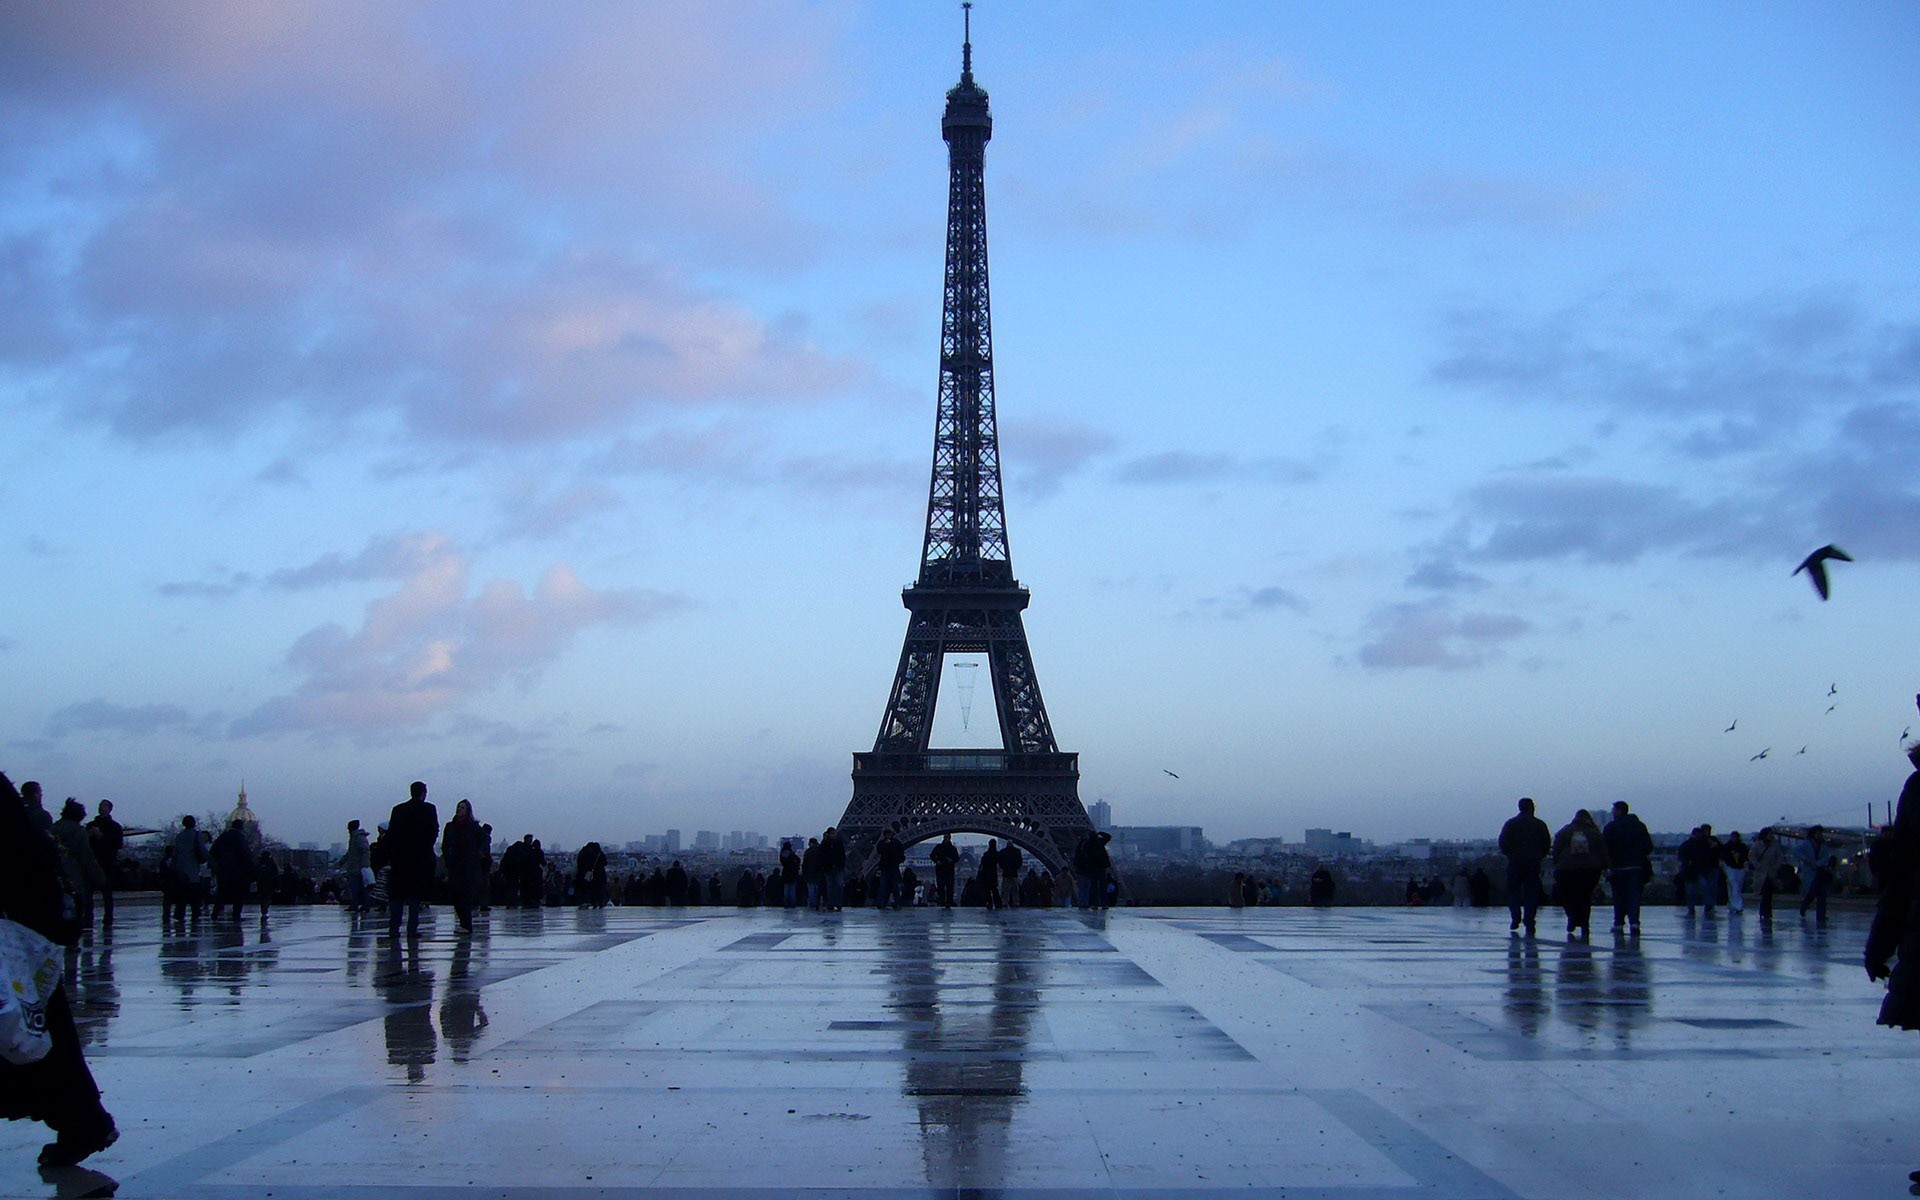 General 1920x1200 Paris Eiffel Tower France gloomy architecture sky people artwork blue landmark Europe